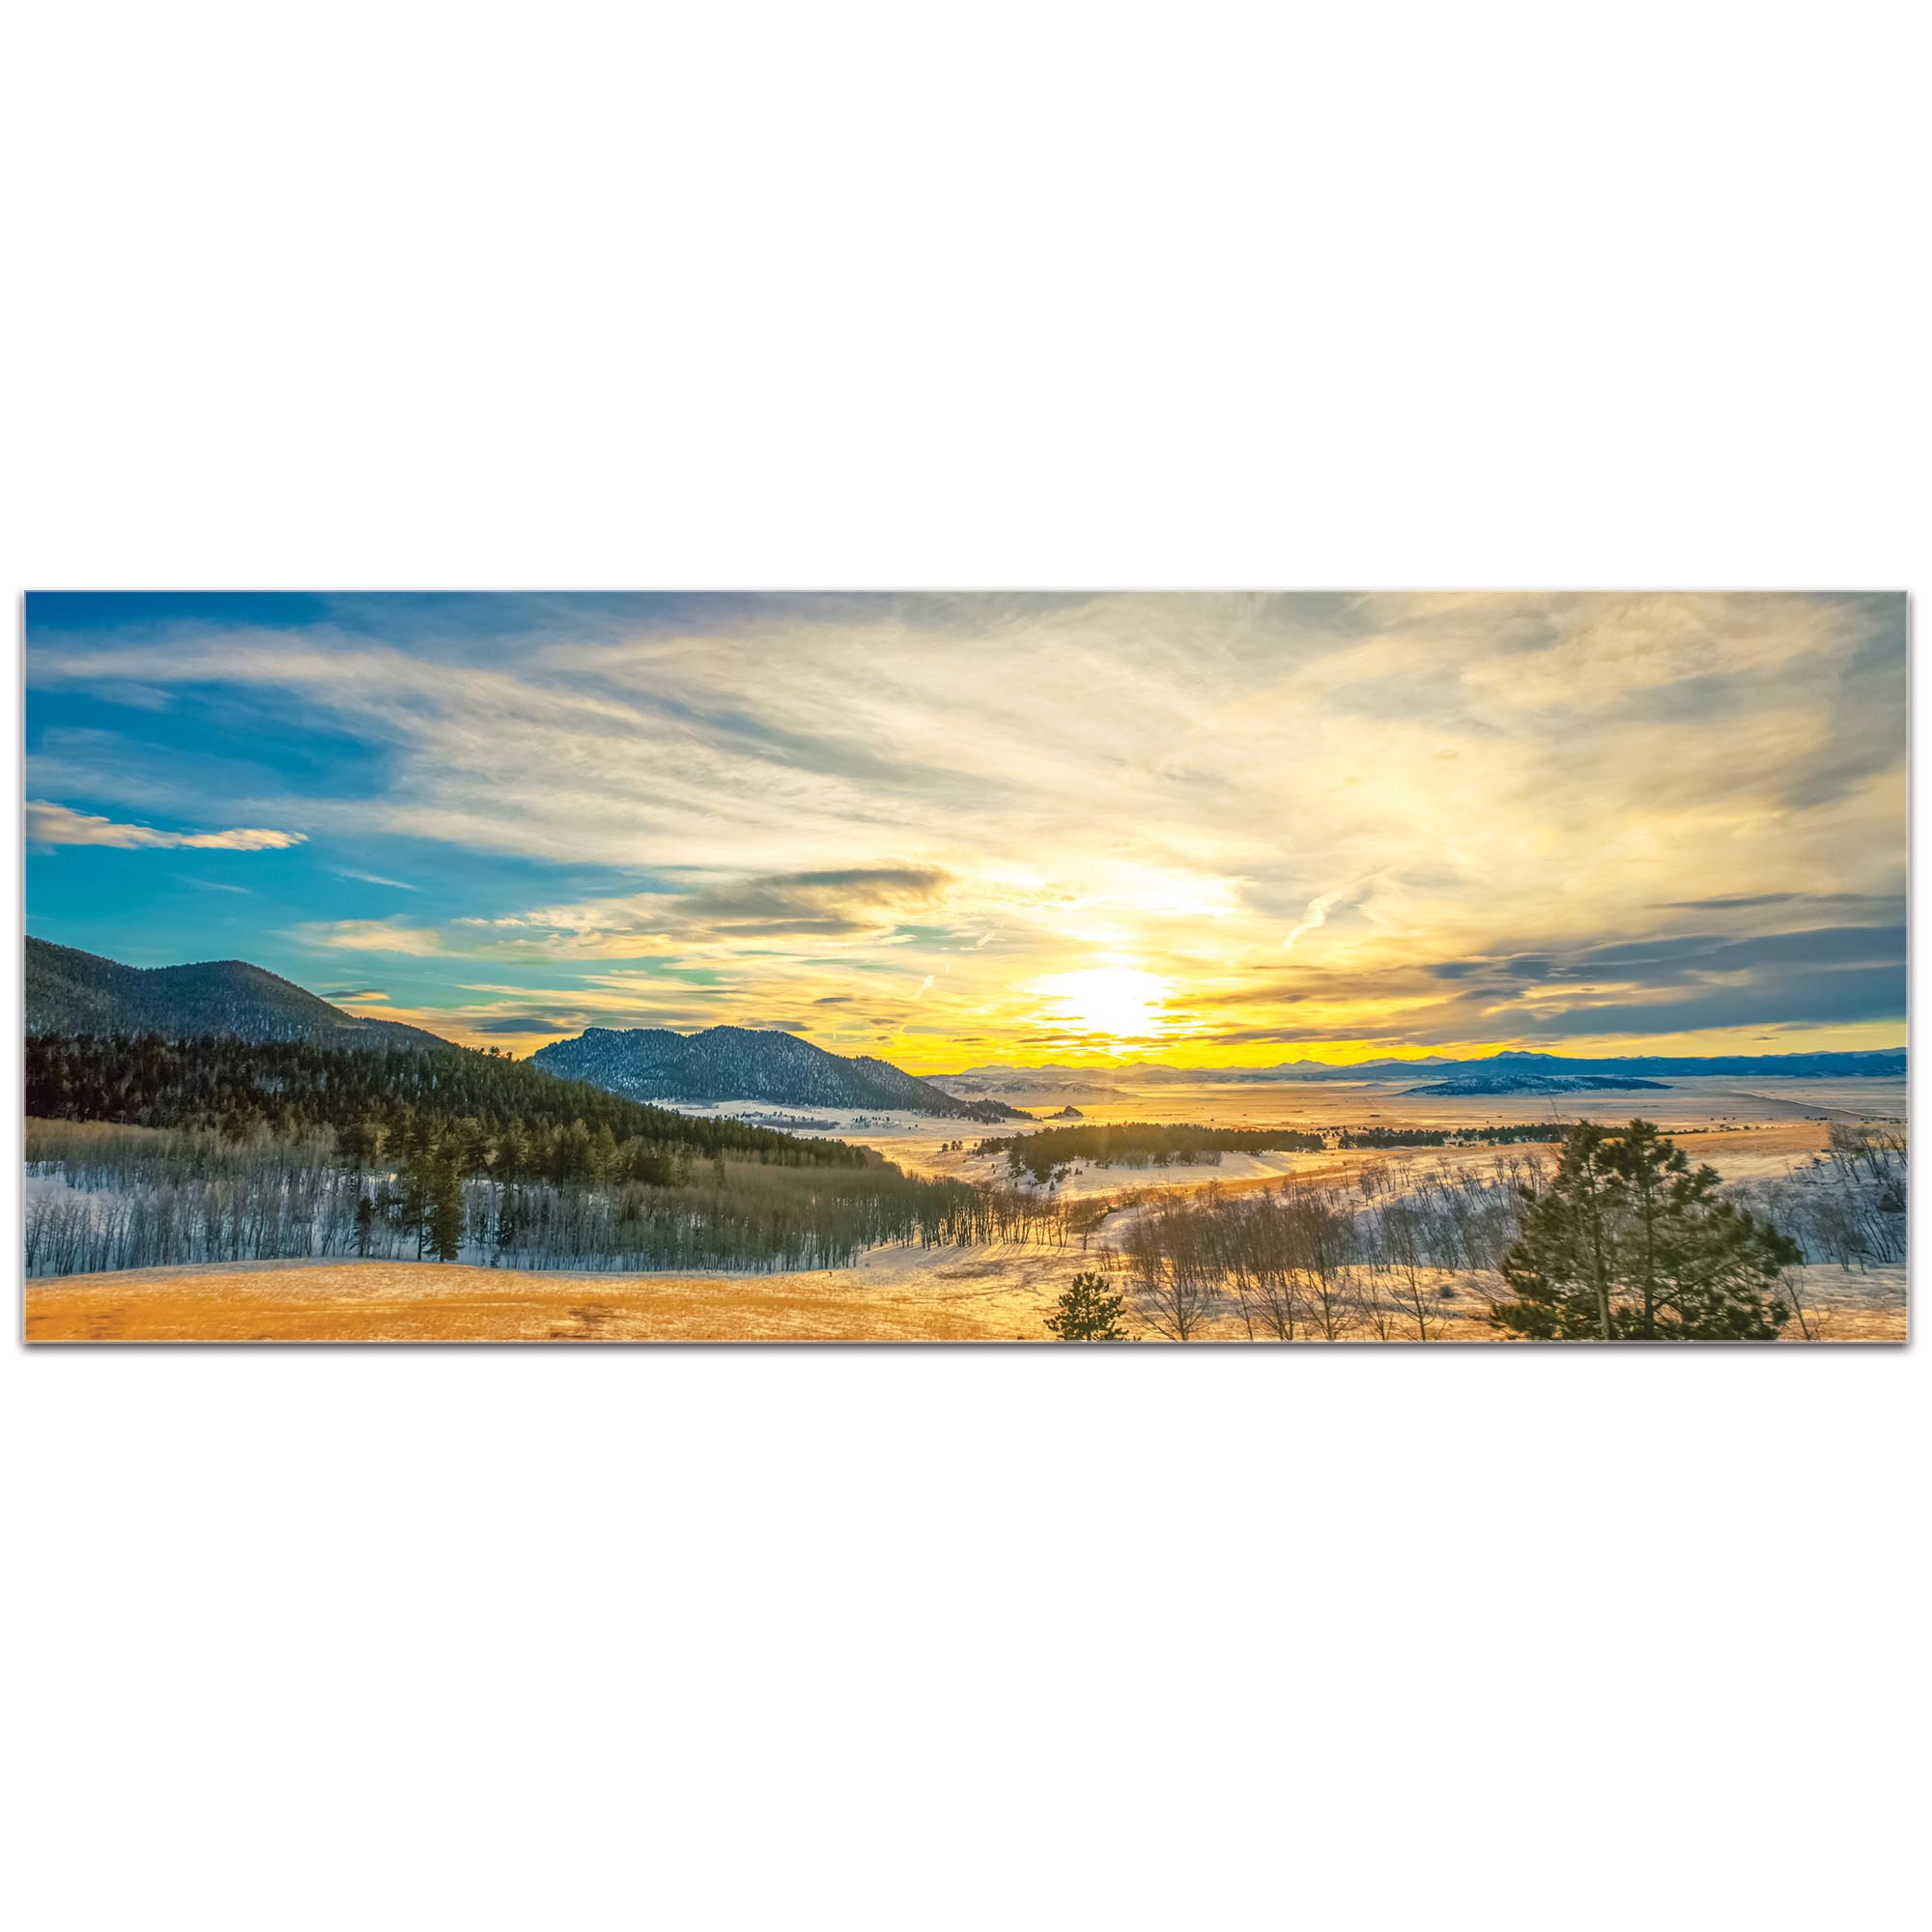 Landscape Photography 'Brisk Sunset' - Winter Sunset Art on Metal or Plexiglass - Image 2